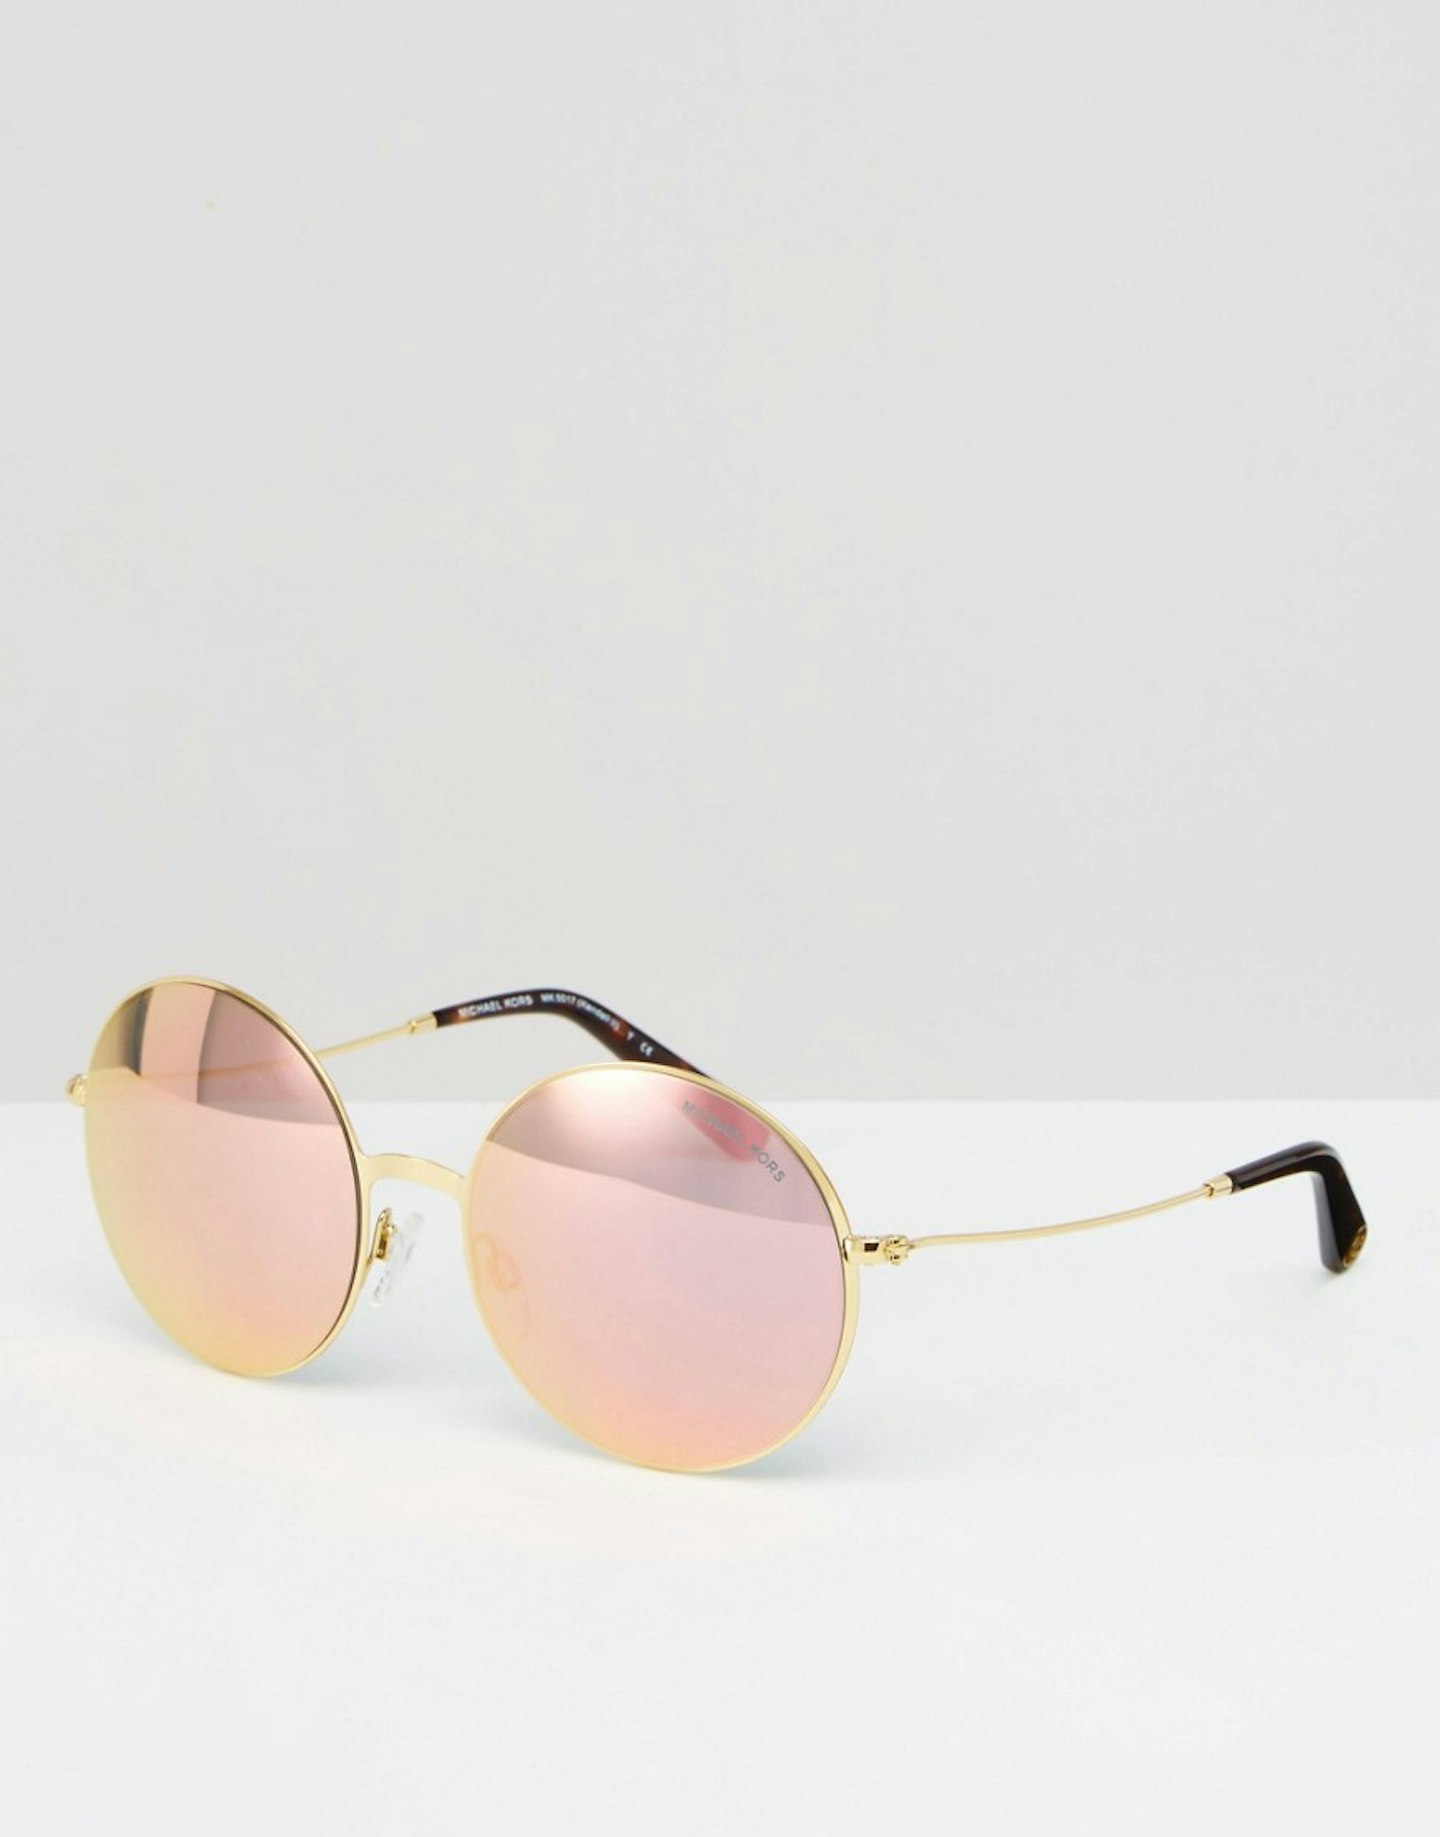 Sunglasses Summer 2016 UK